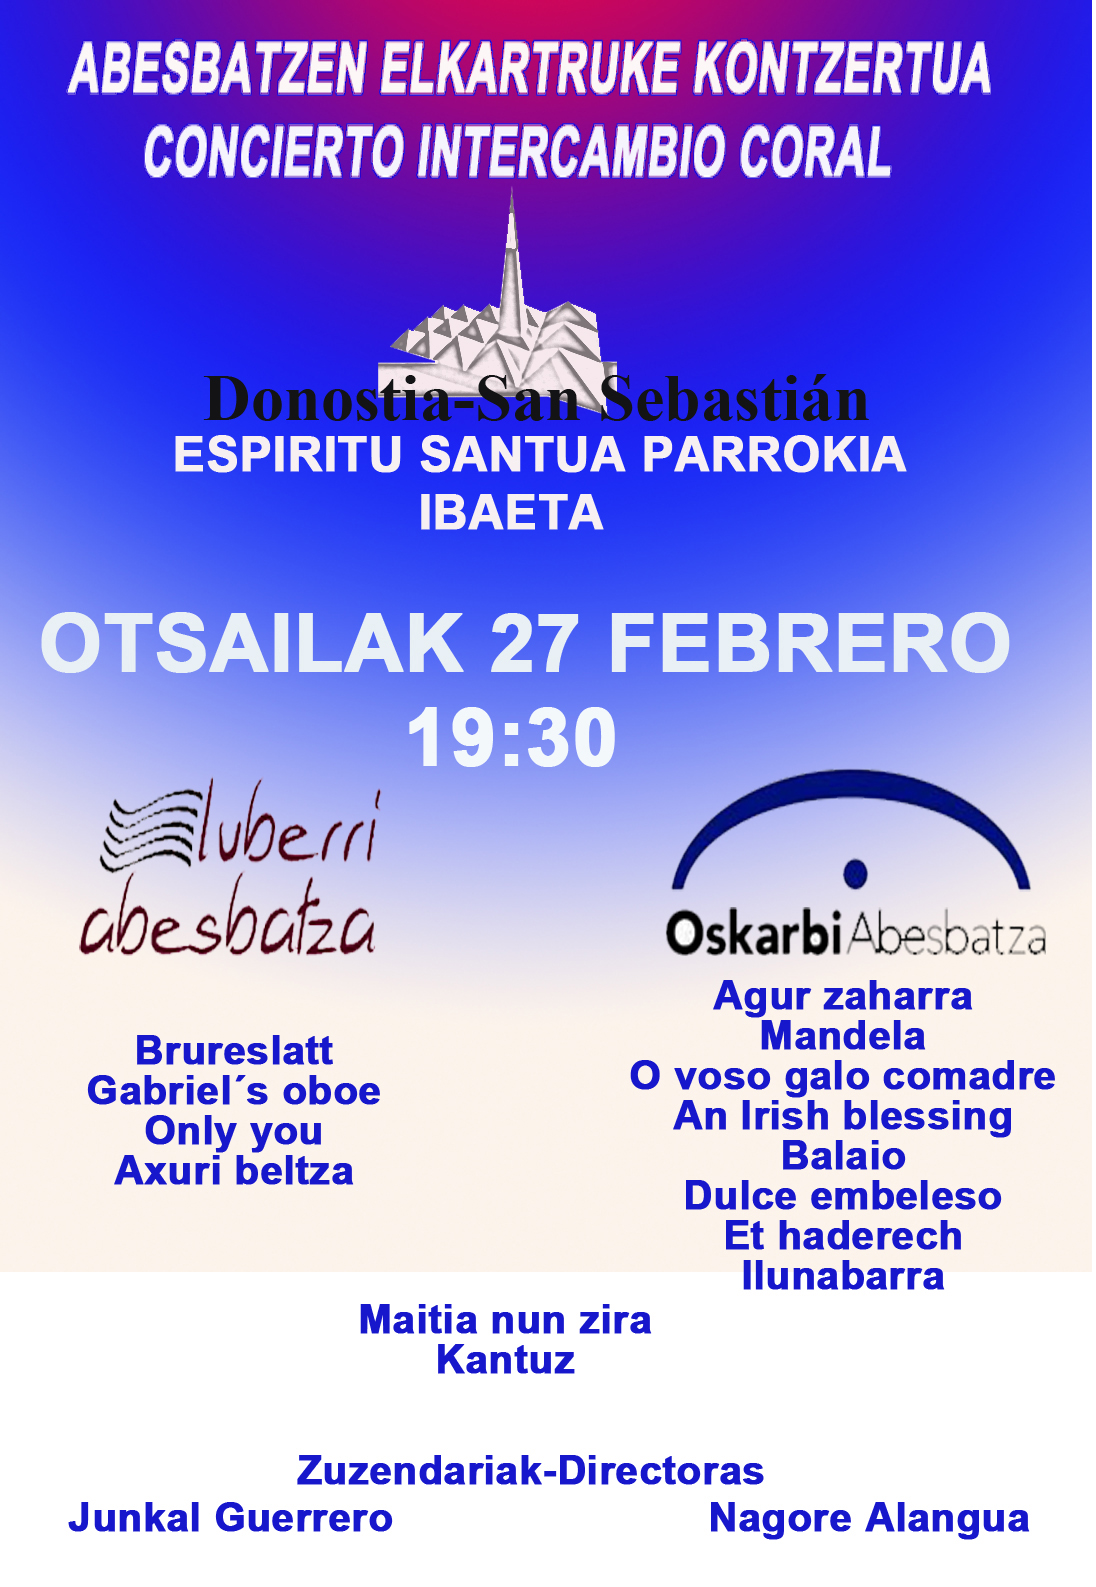 Concierto intercambio coral con Luberri abesbatza + Oskarbi abesbatza, sábado 27 de febrero en Donostia